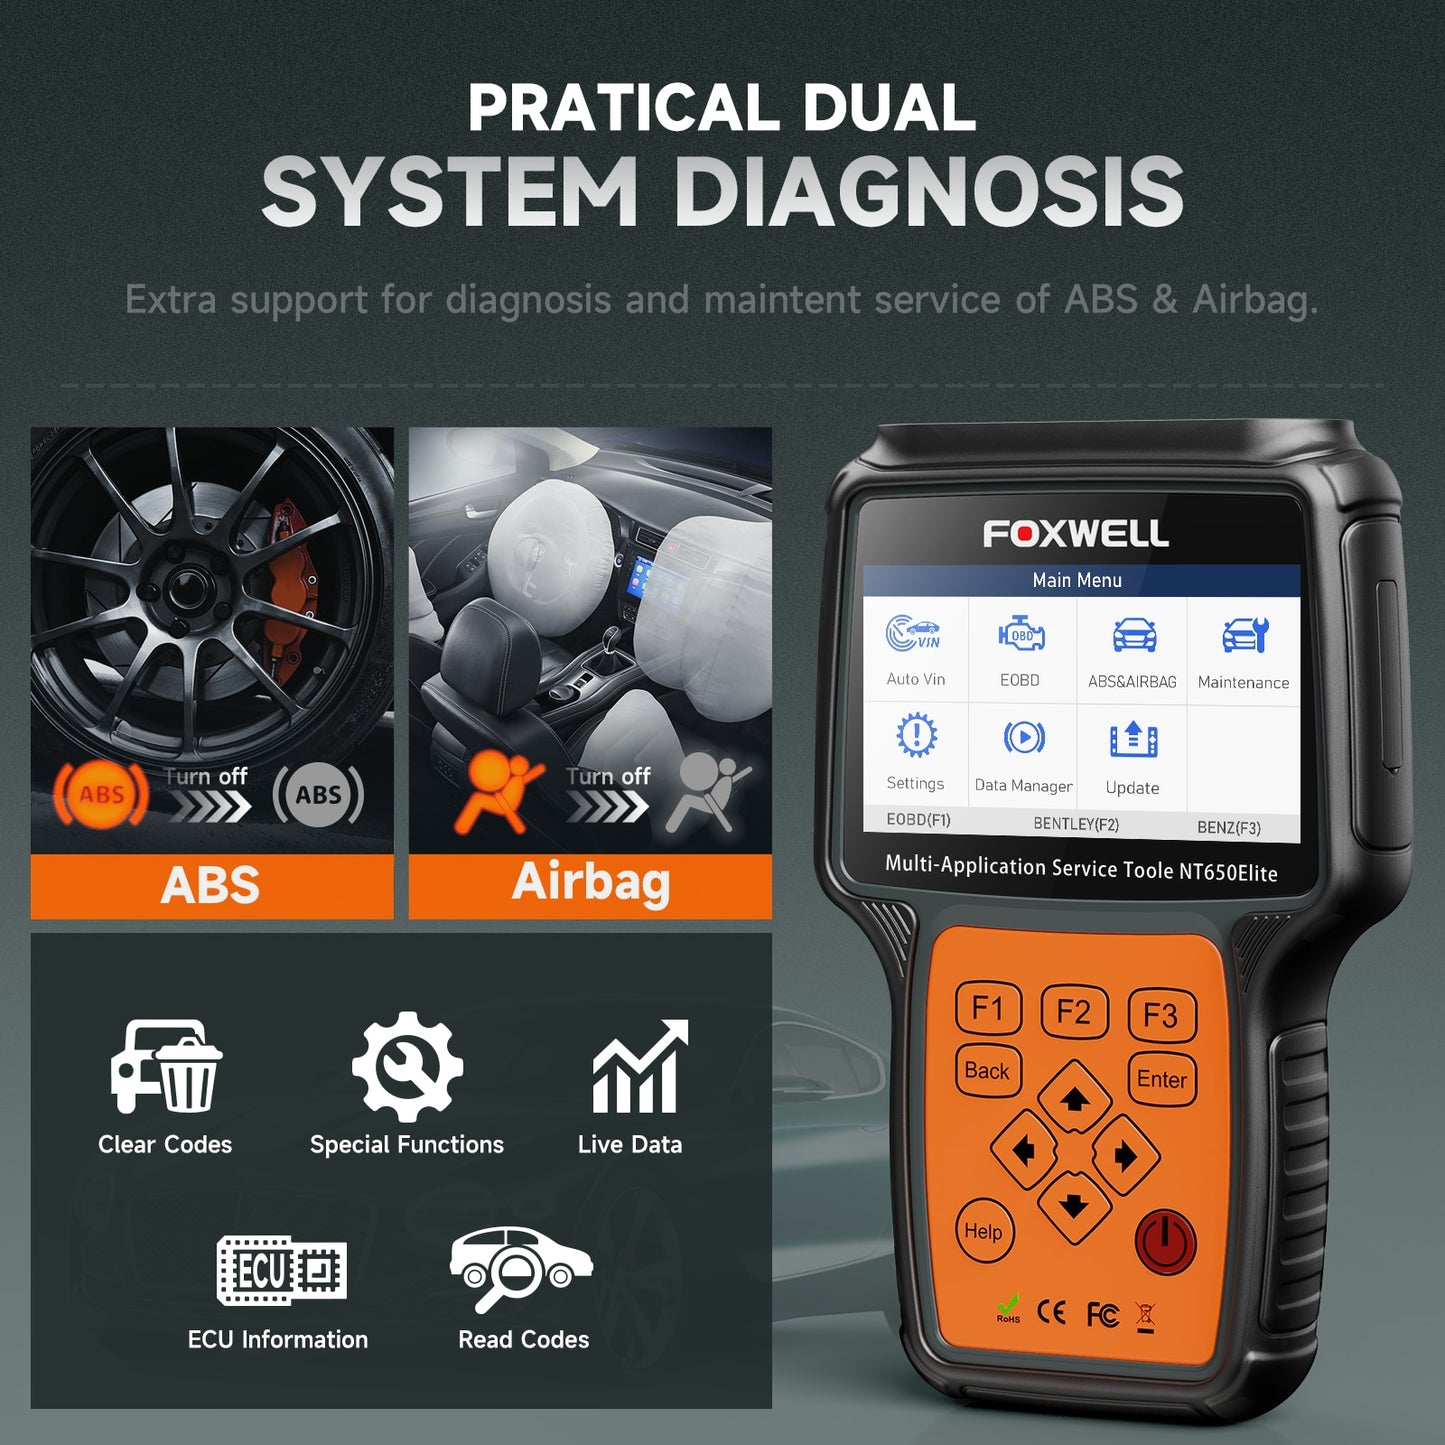 FOXWELL NT650 Elite OBD2 profesionalna dijagnostika automobila